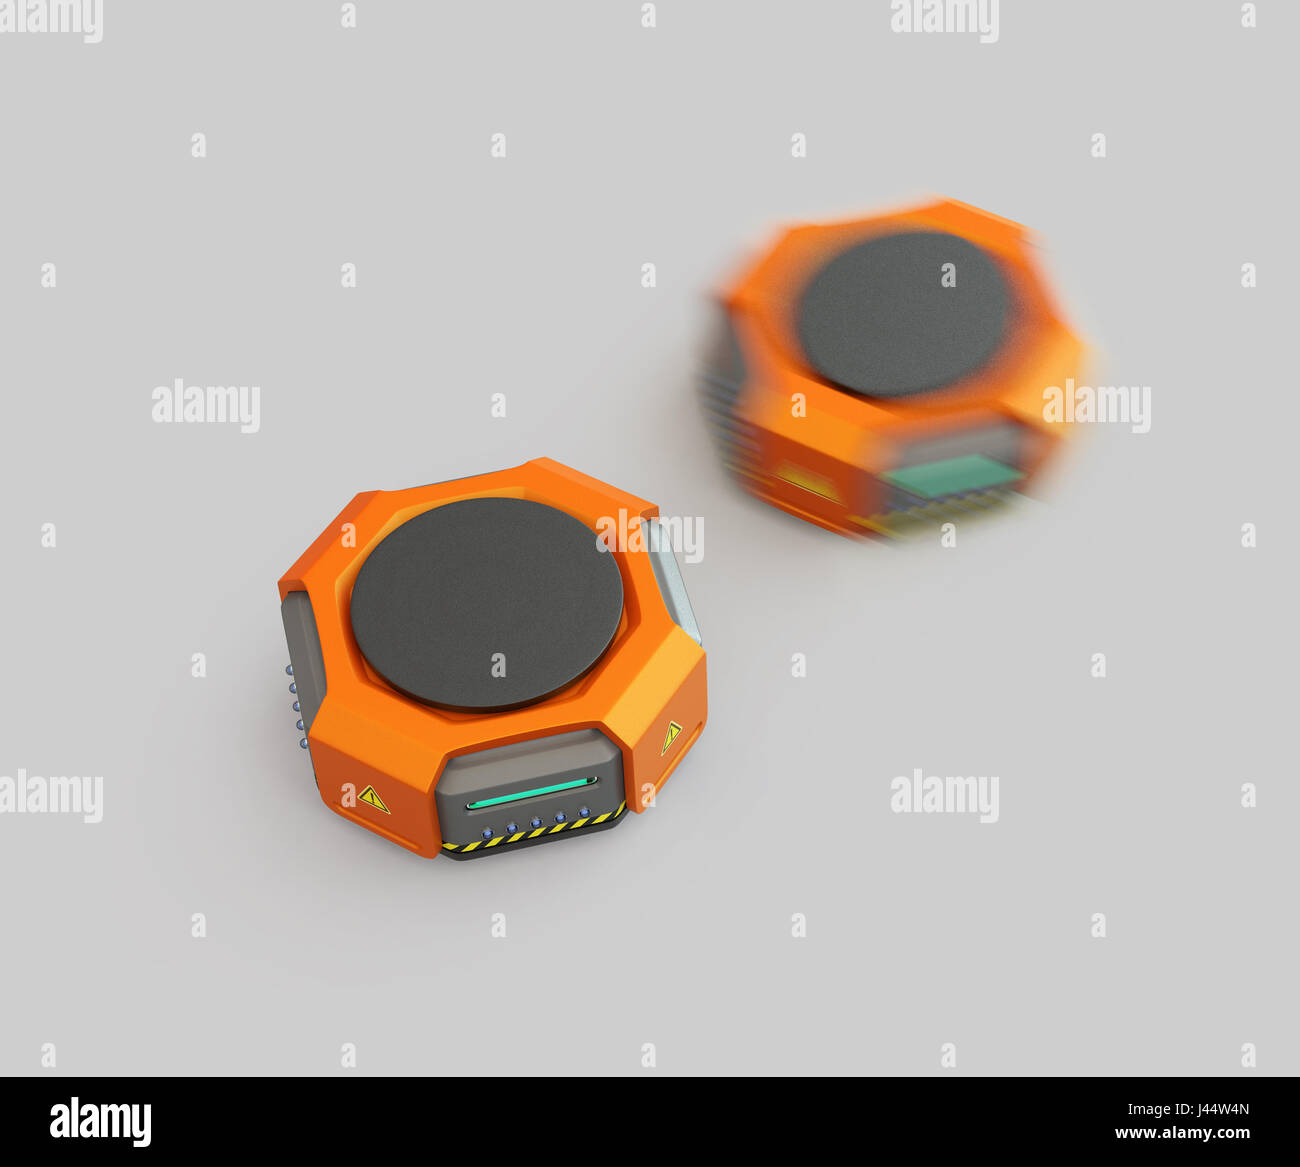 Orange warehouse robots on gray background. 3D rendering image. Stock Photo